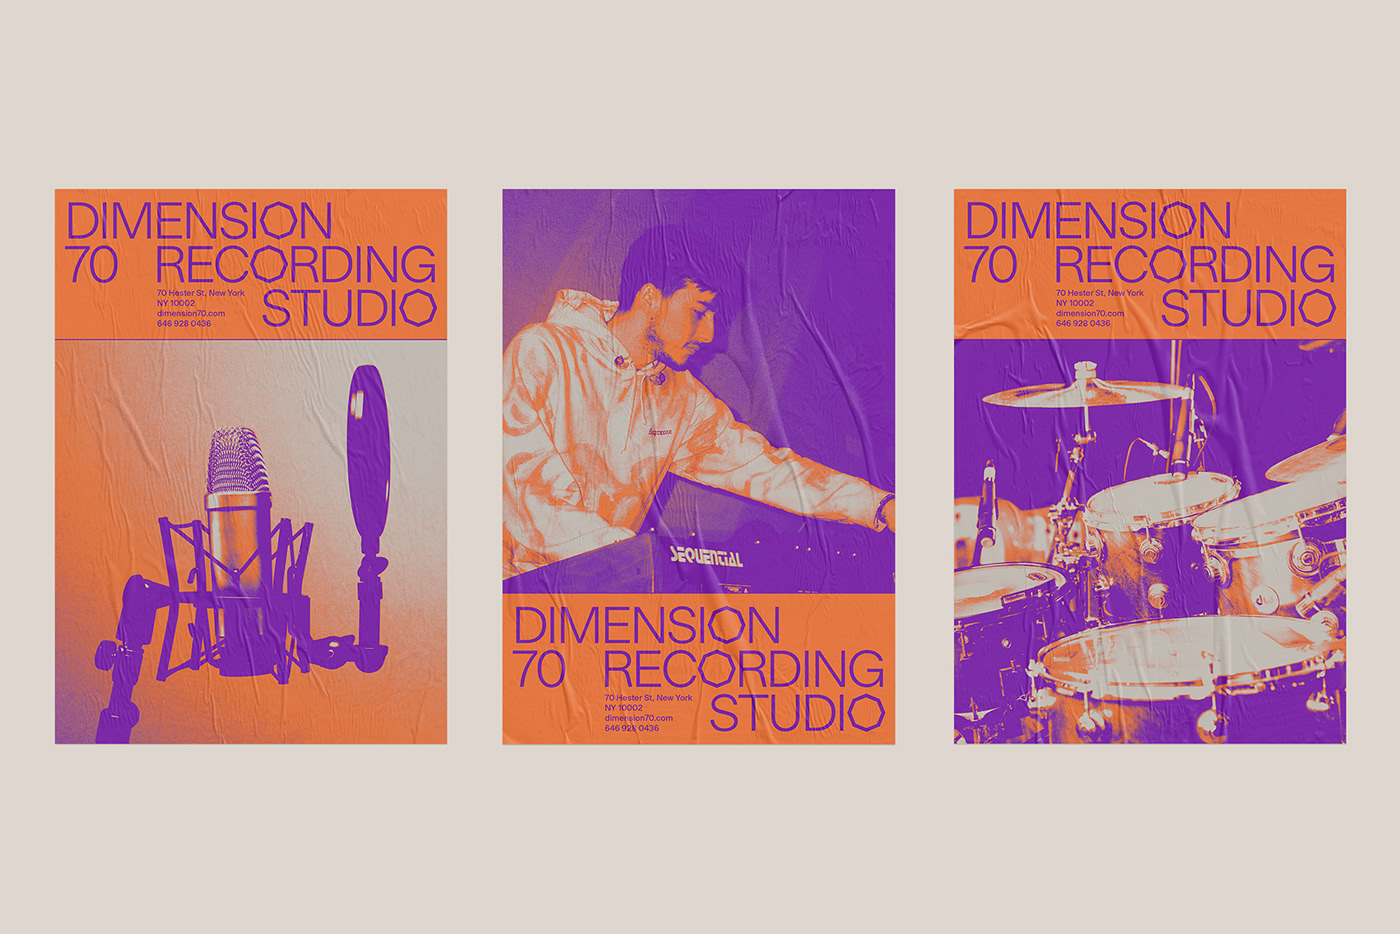 identity NY newyork sounstudio music barcelona typography   d70 dimension RecordingStudio